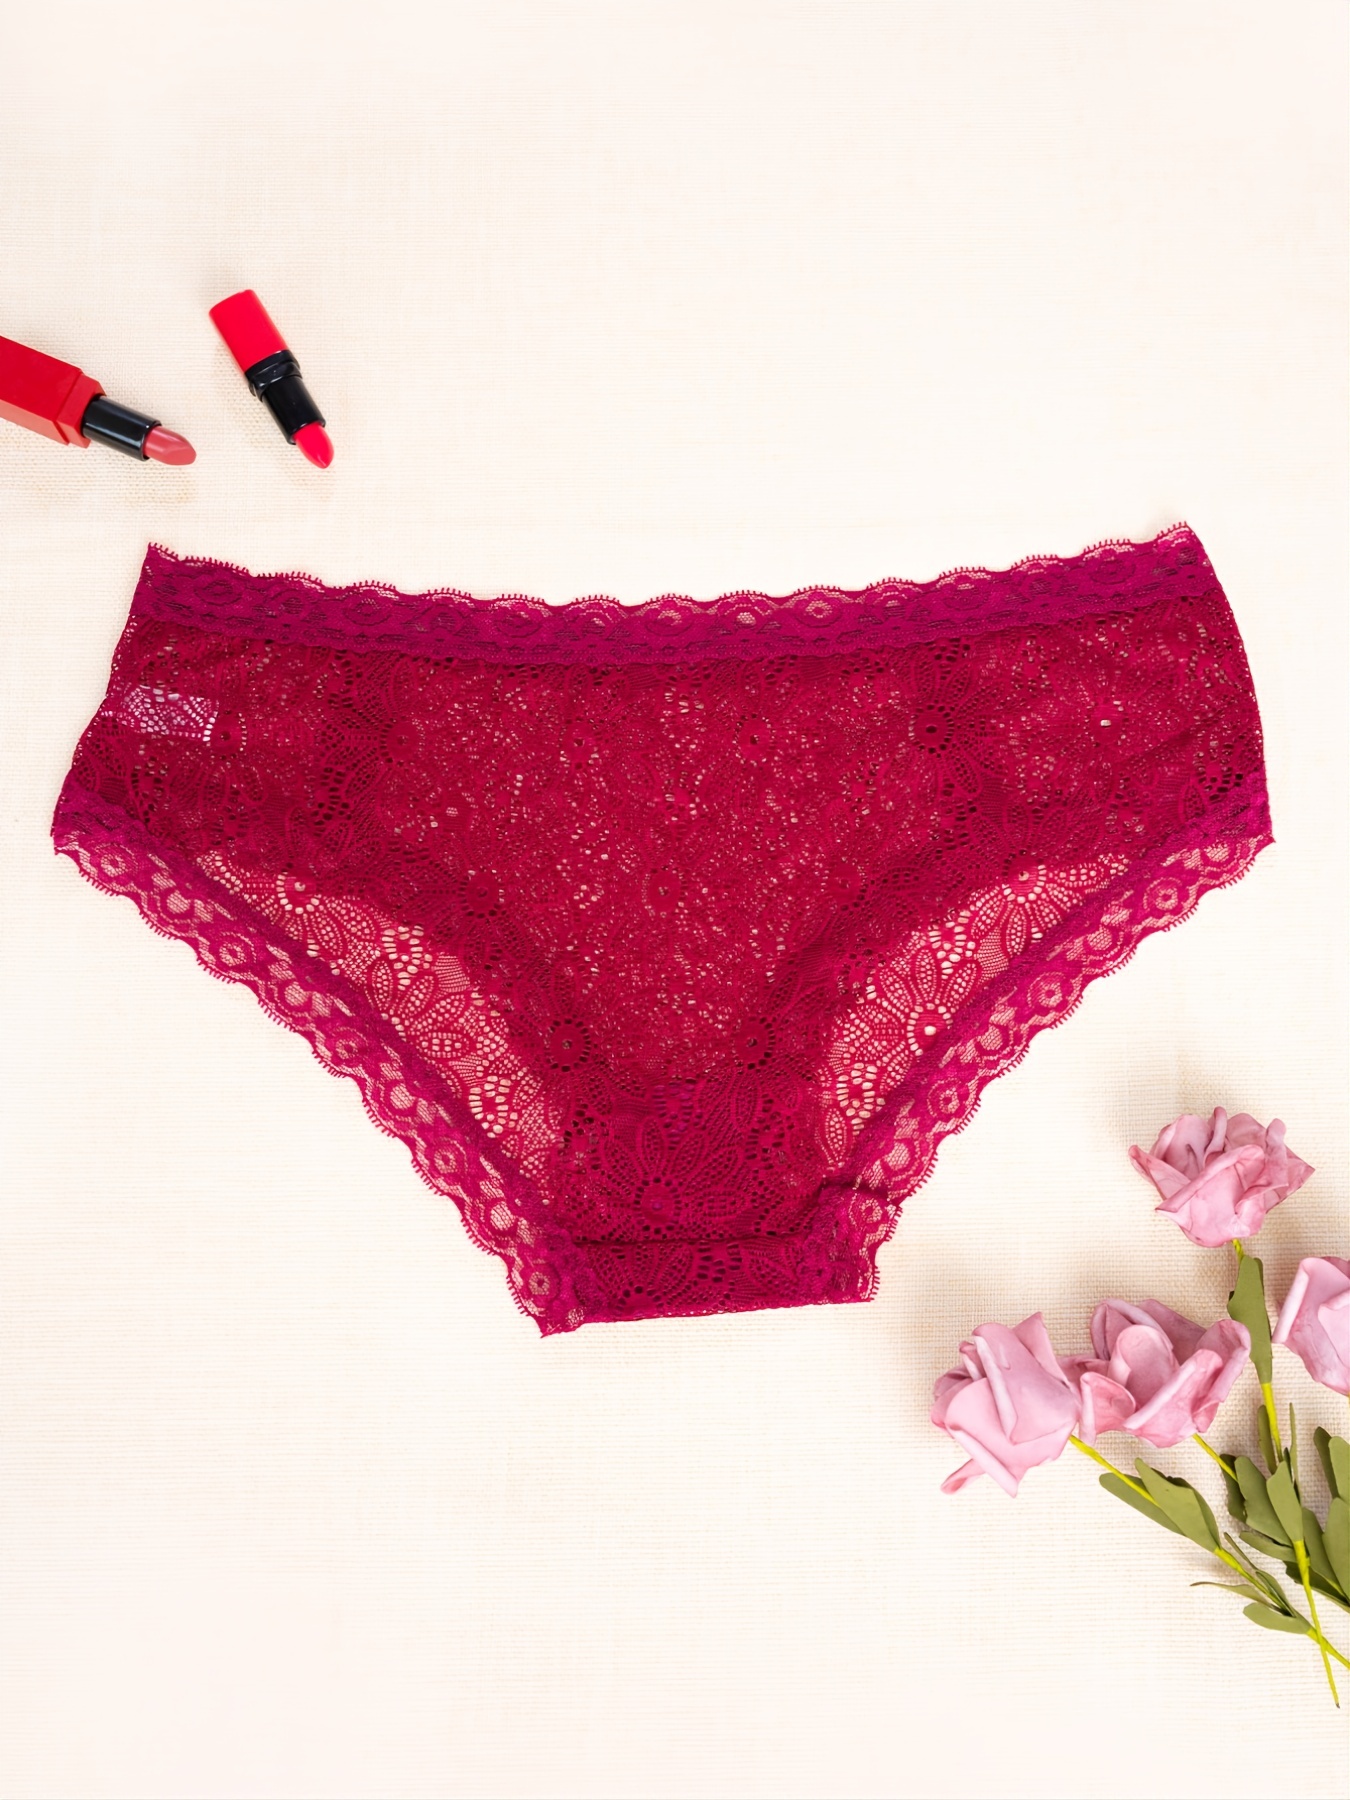 Women Panties Pink Lace Transparent Hollow Out Underwear Comfort